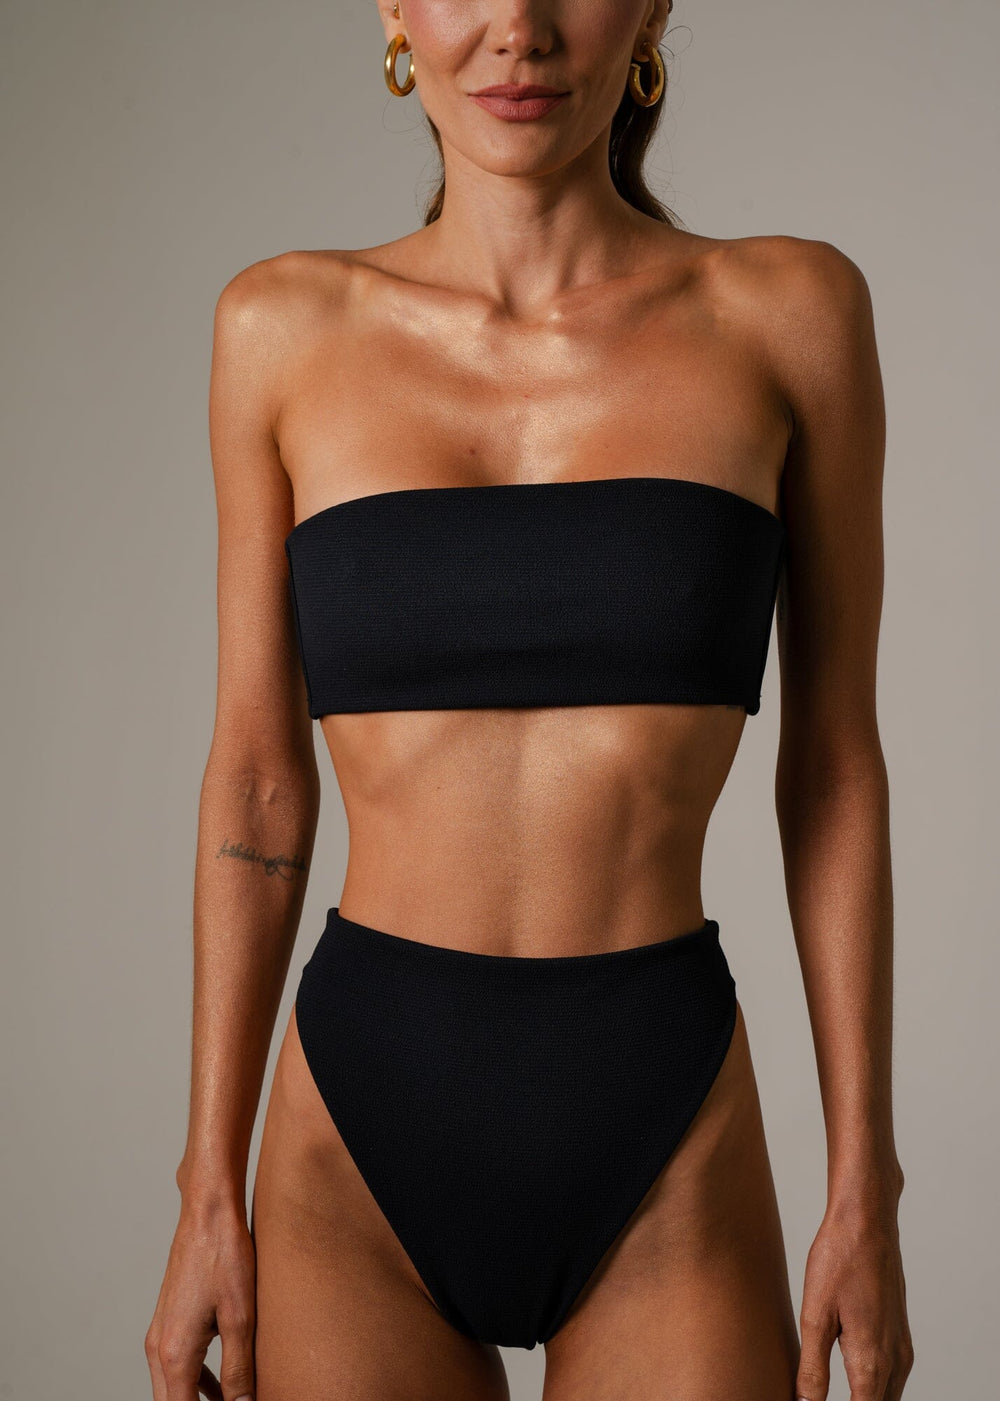 Kayla Top - Black Sand Top Naked Swimwear 